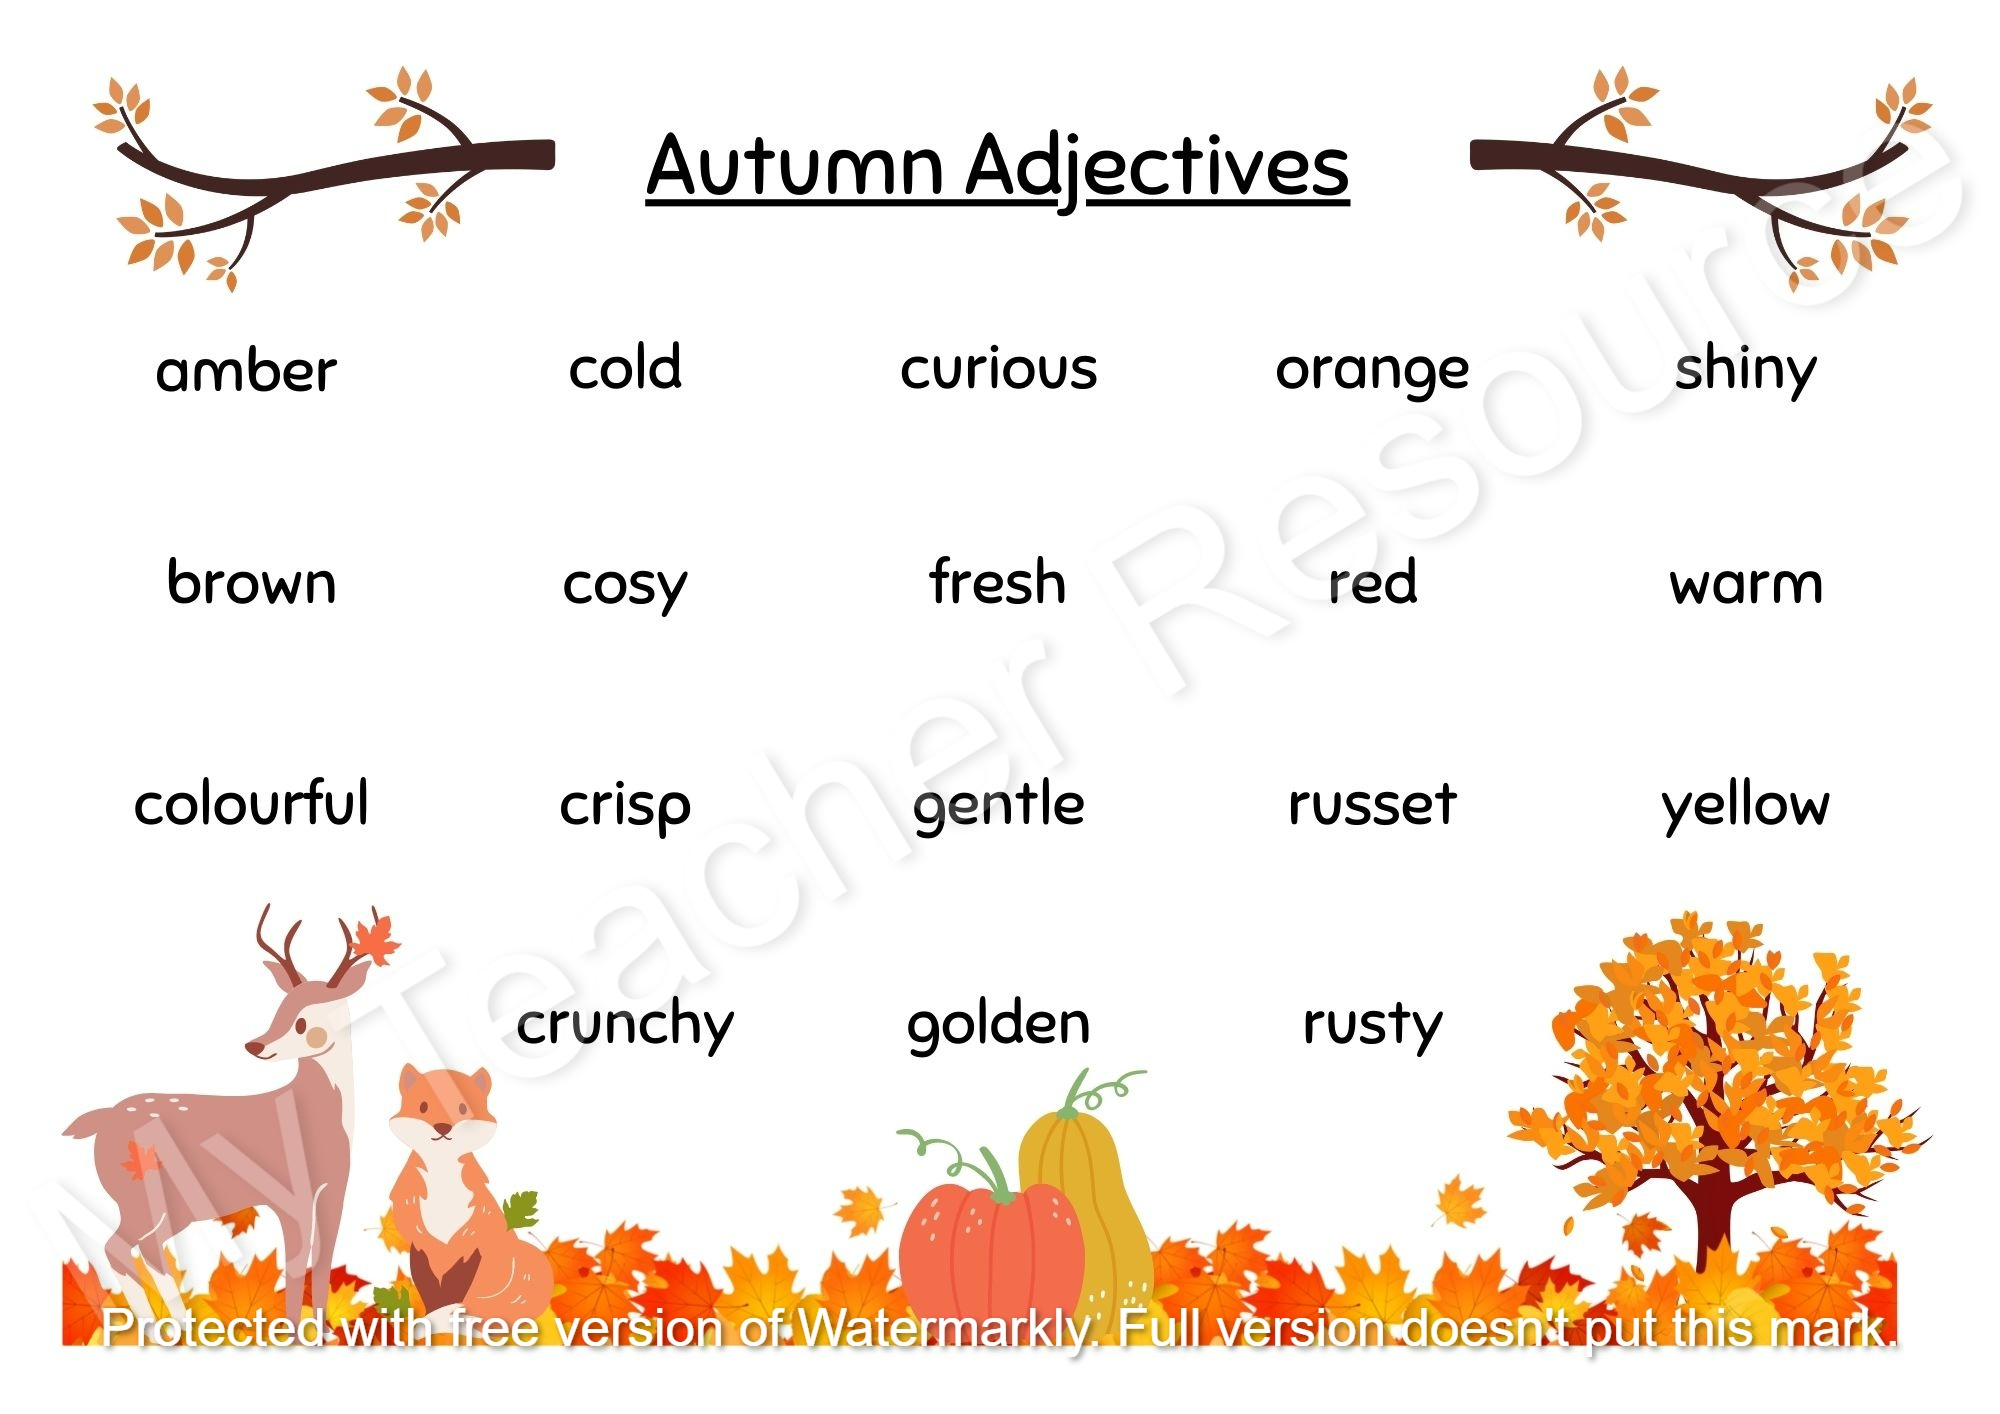 autumn adjectives